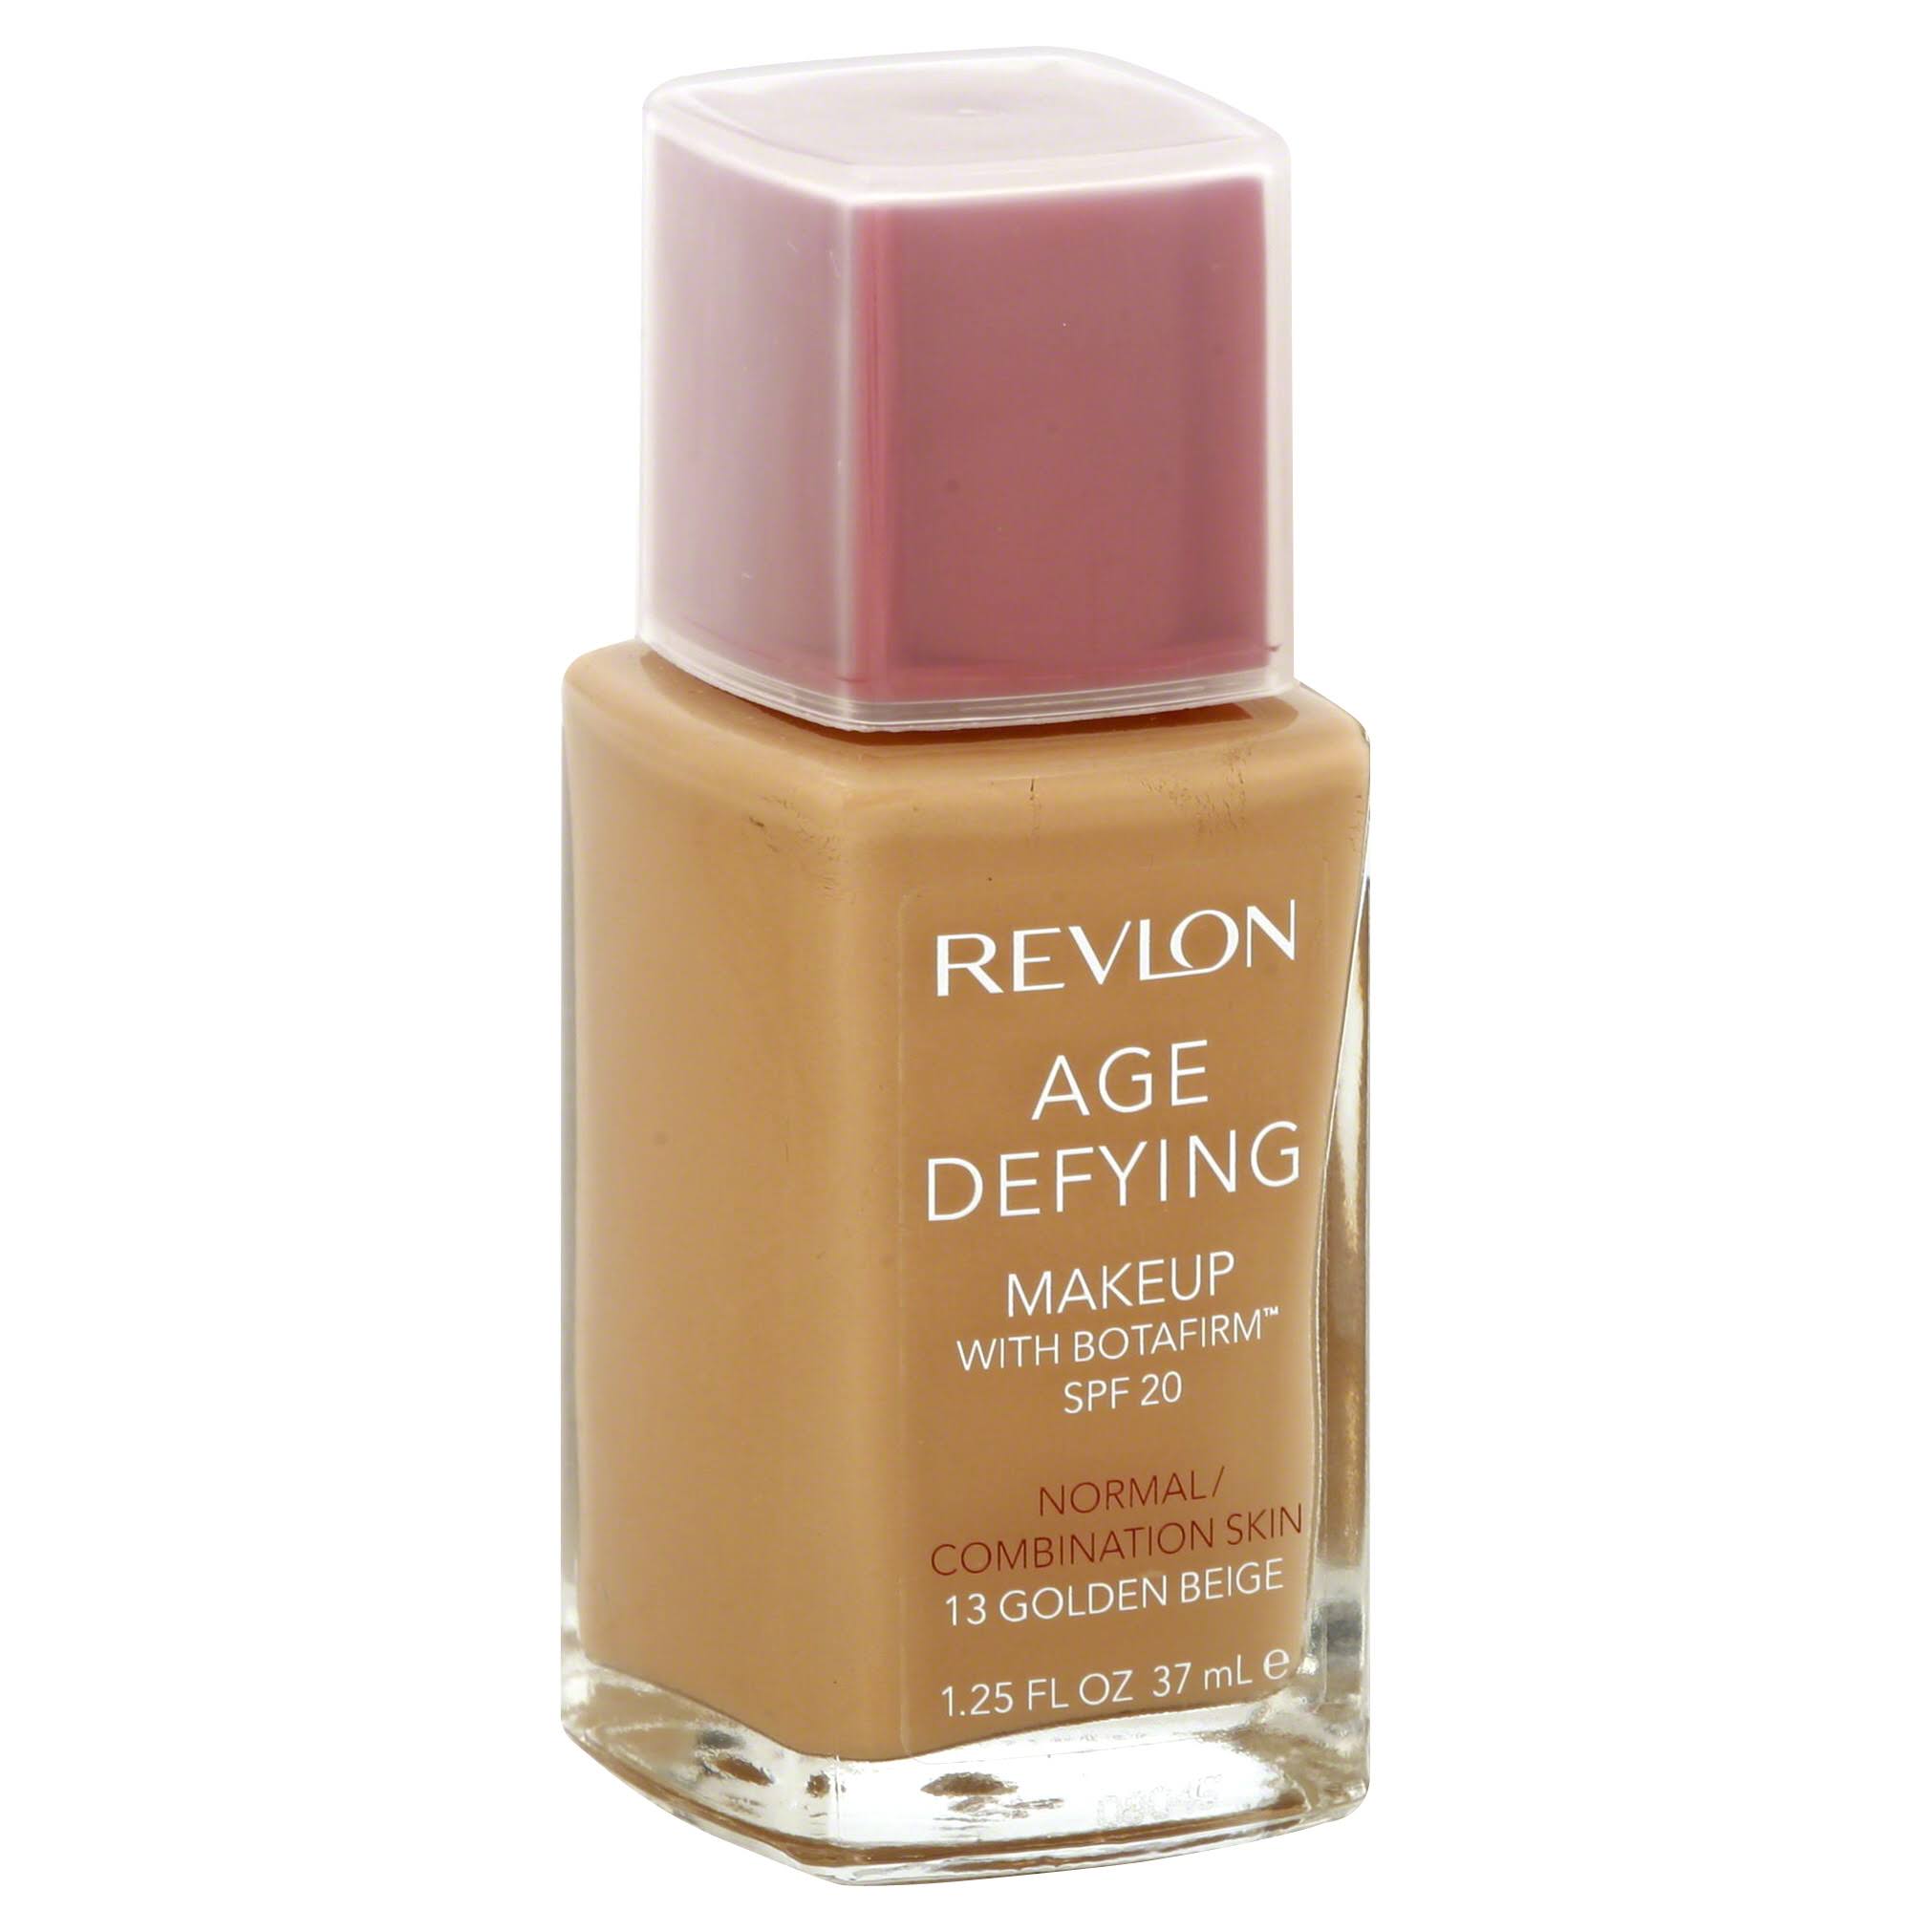 REVLON Age Defying Makeup with Botafirm, Normal/Combination Skin, Golden Beige 13 - ADDROS.COM